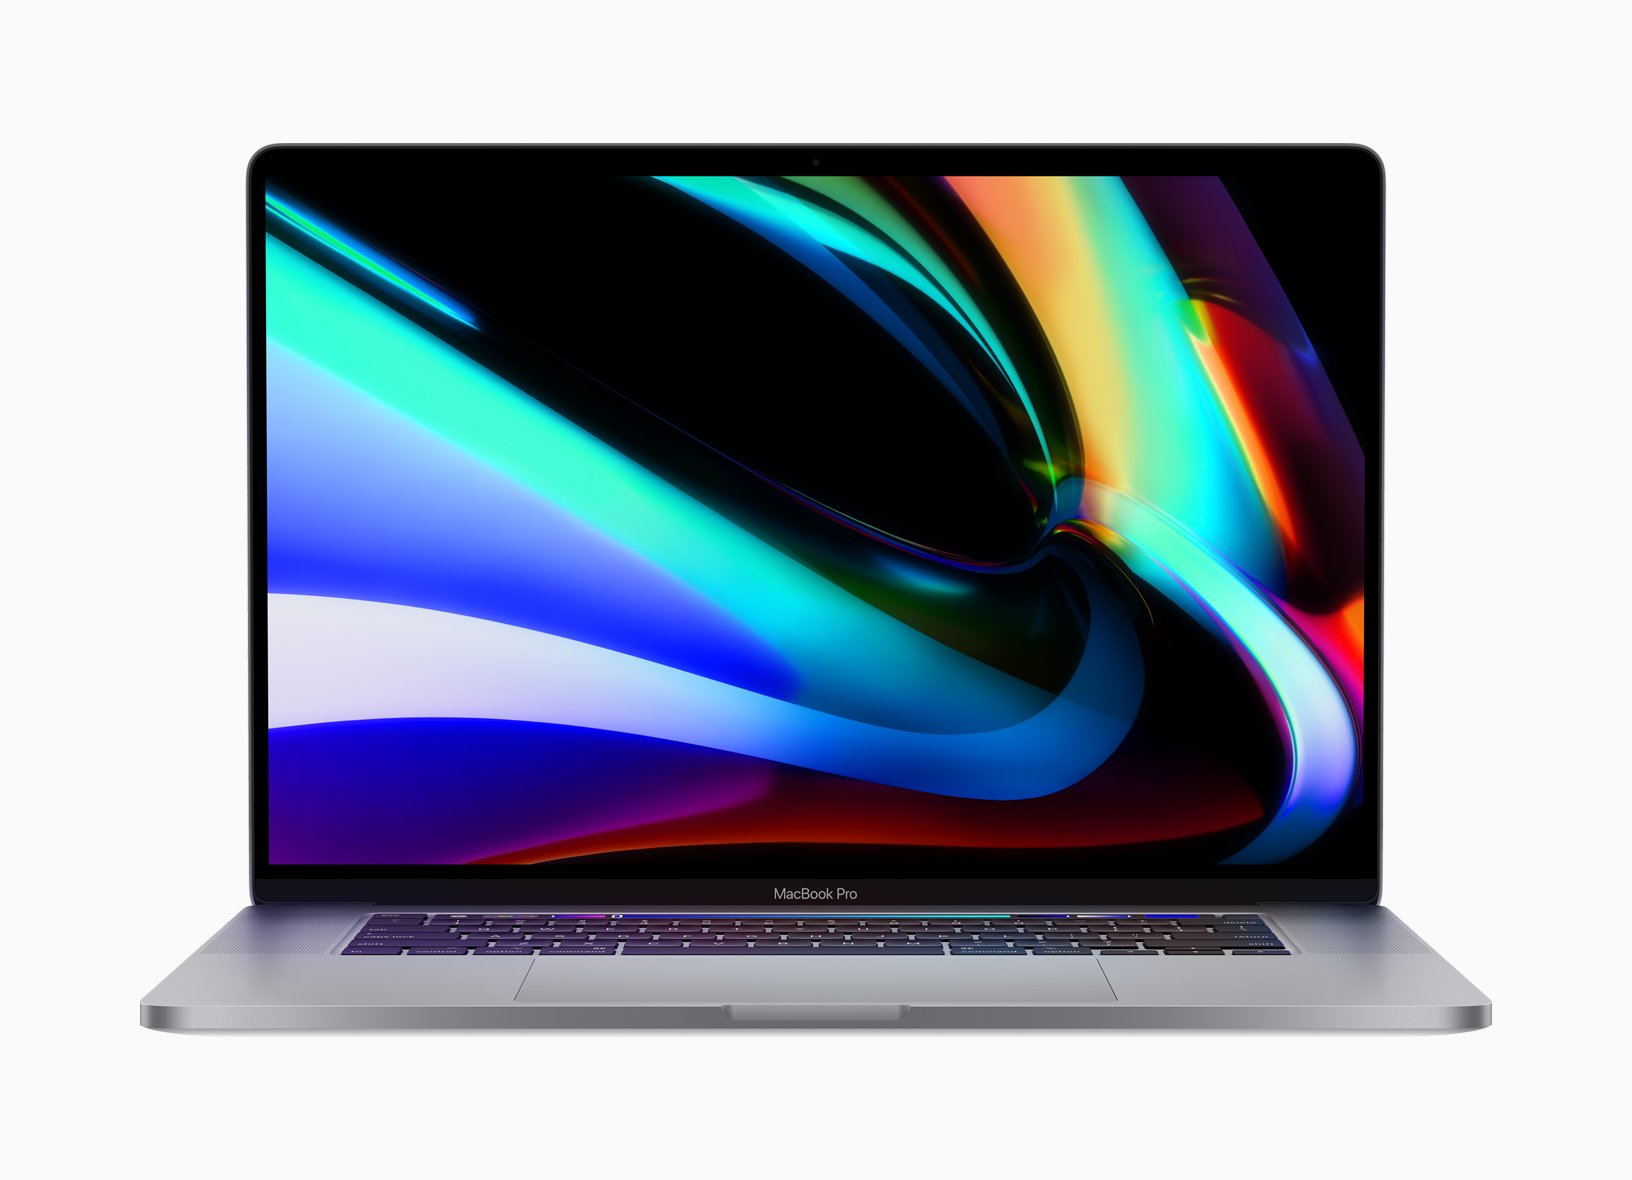 alt="MacBook Pro 16 นิ้ว"